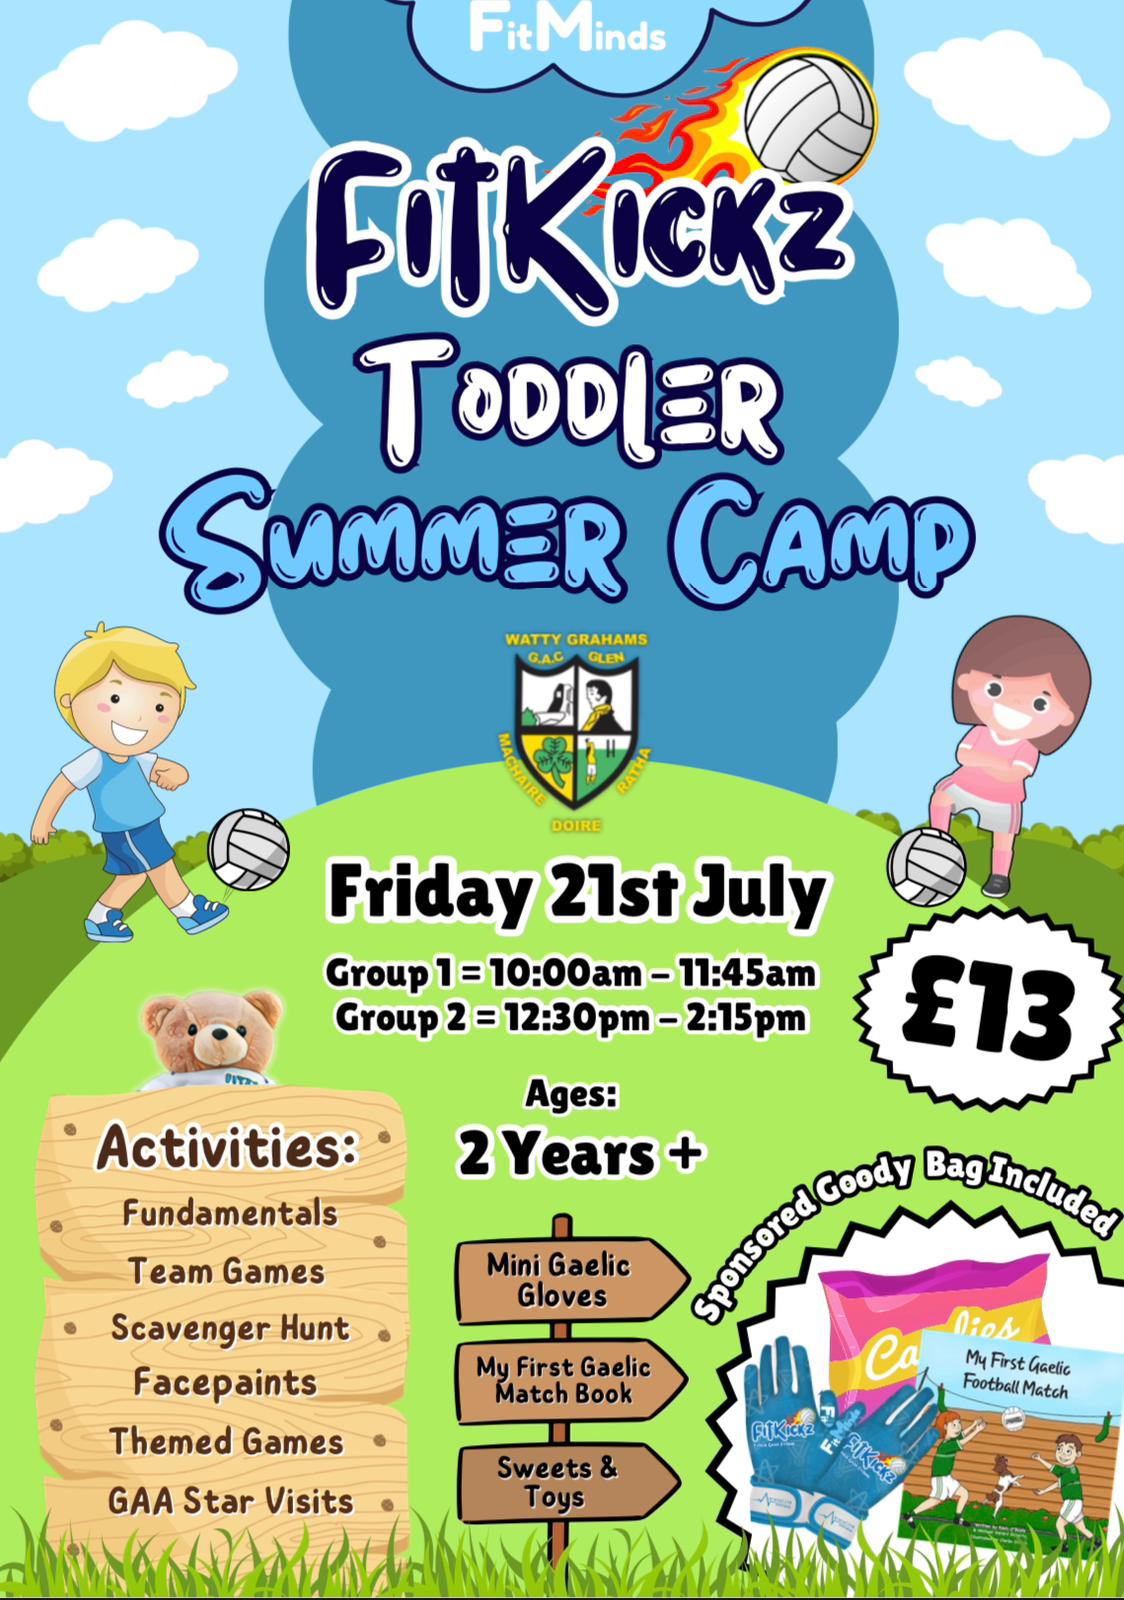 FitKickz Toddler Summer Camp event details